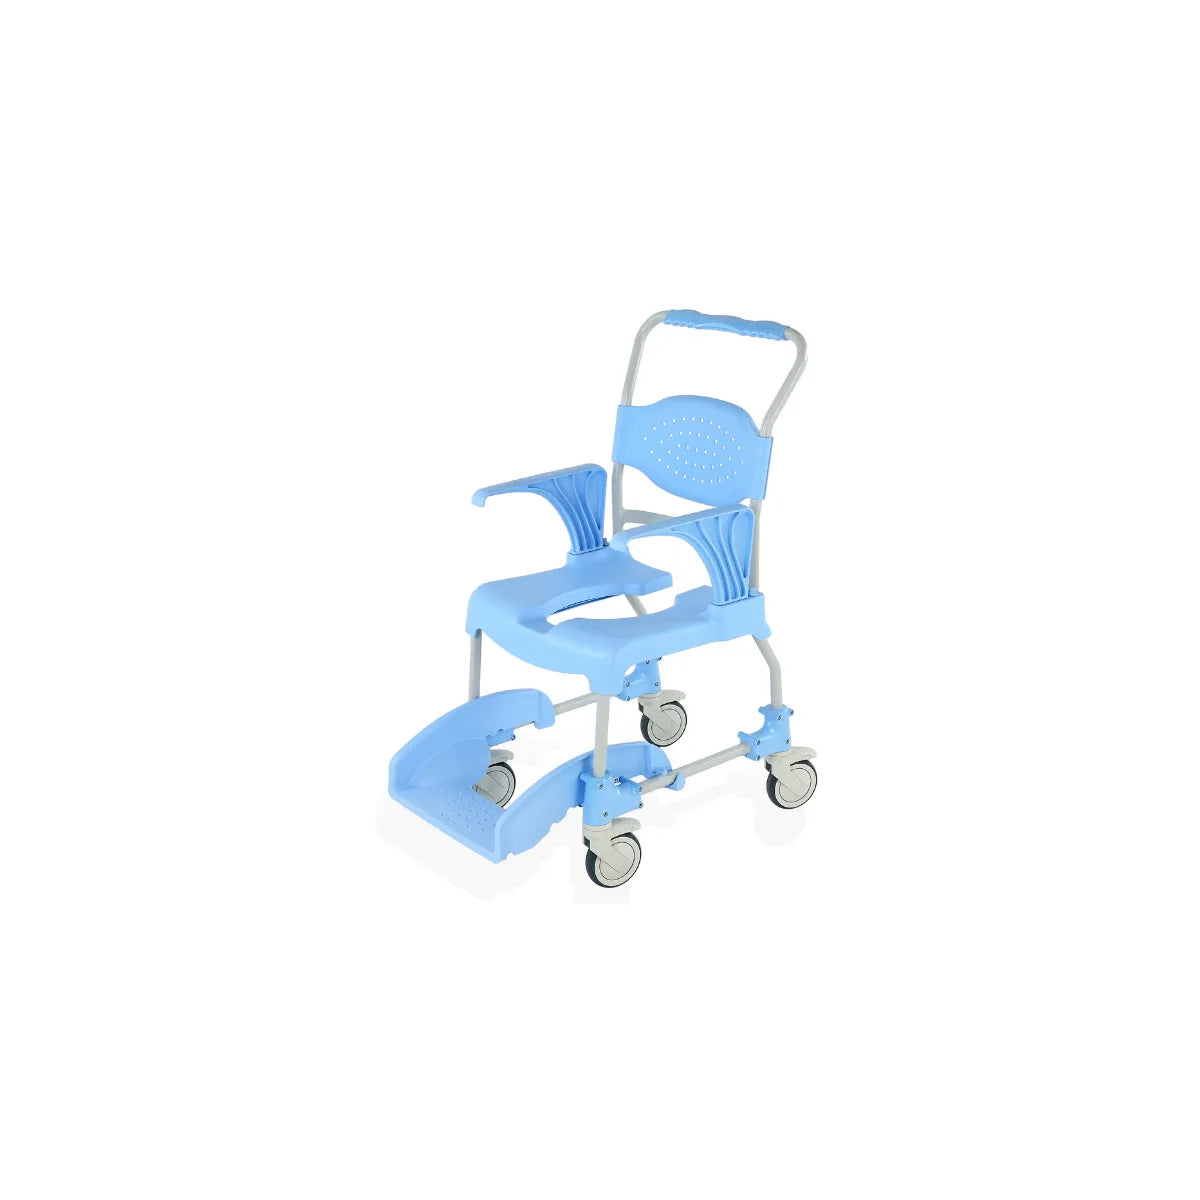 Alerta Aqua Chair - Shower Commode Chair